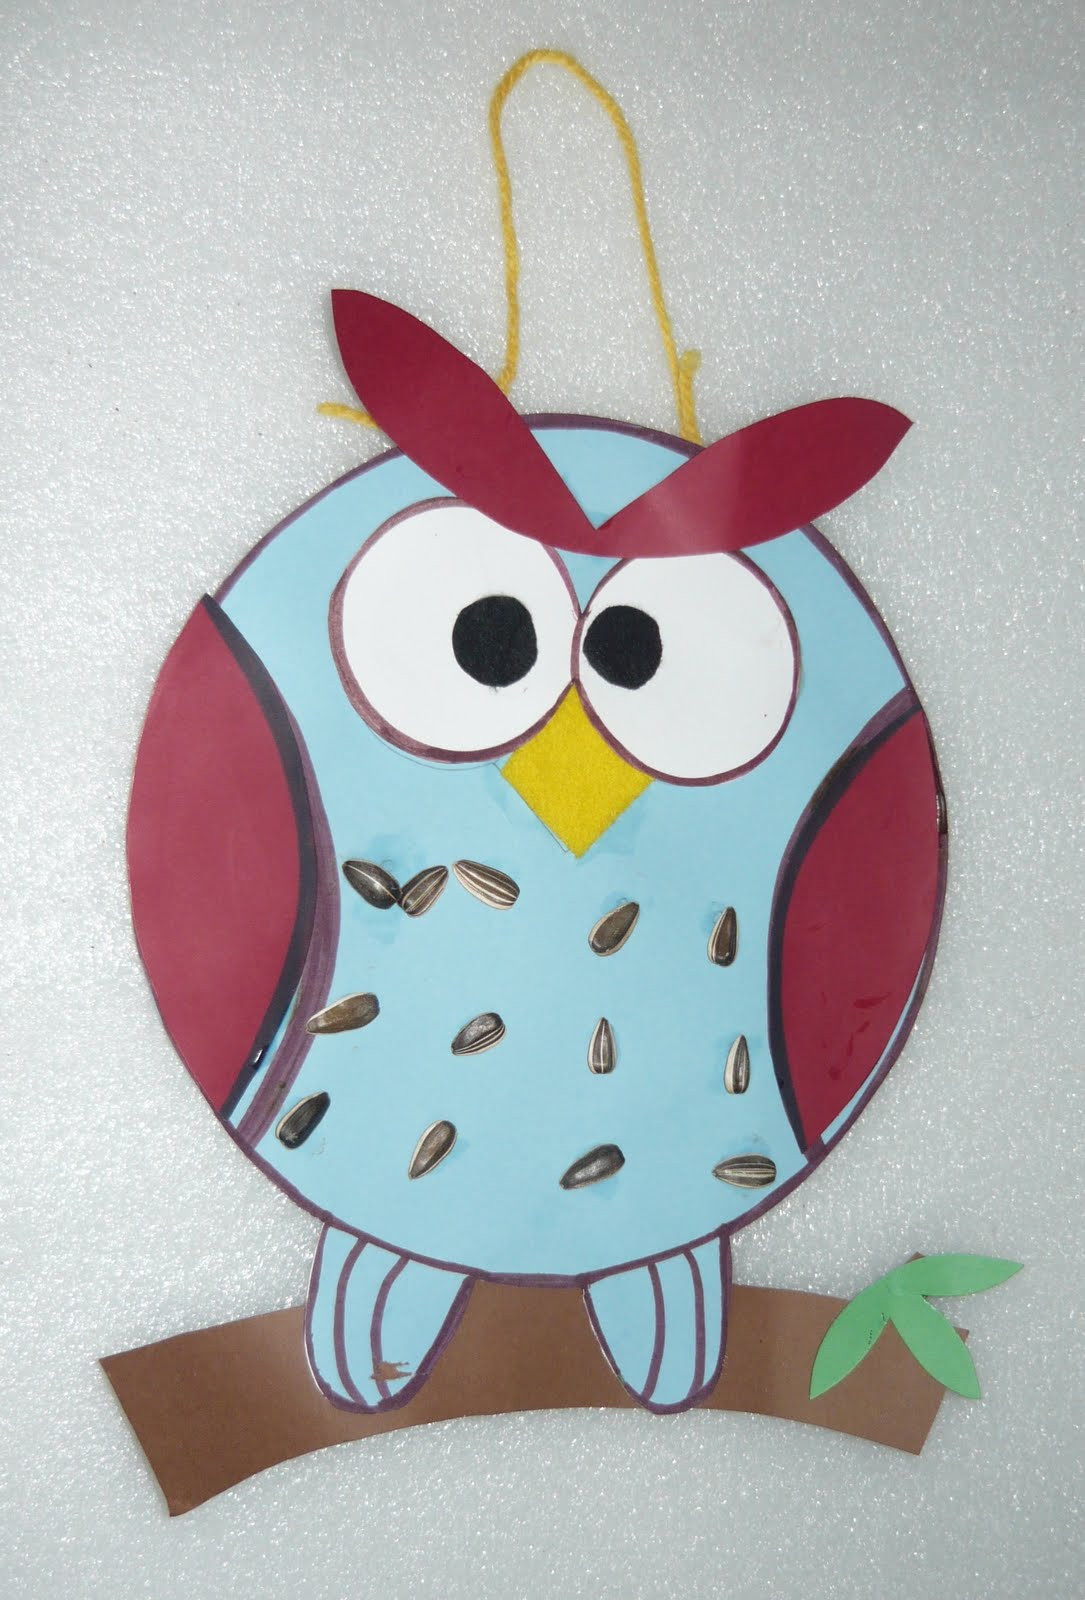 Owl Crafts For Preschoolers
 Nyla s Crafty Teaching My Son s Preschool Pics